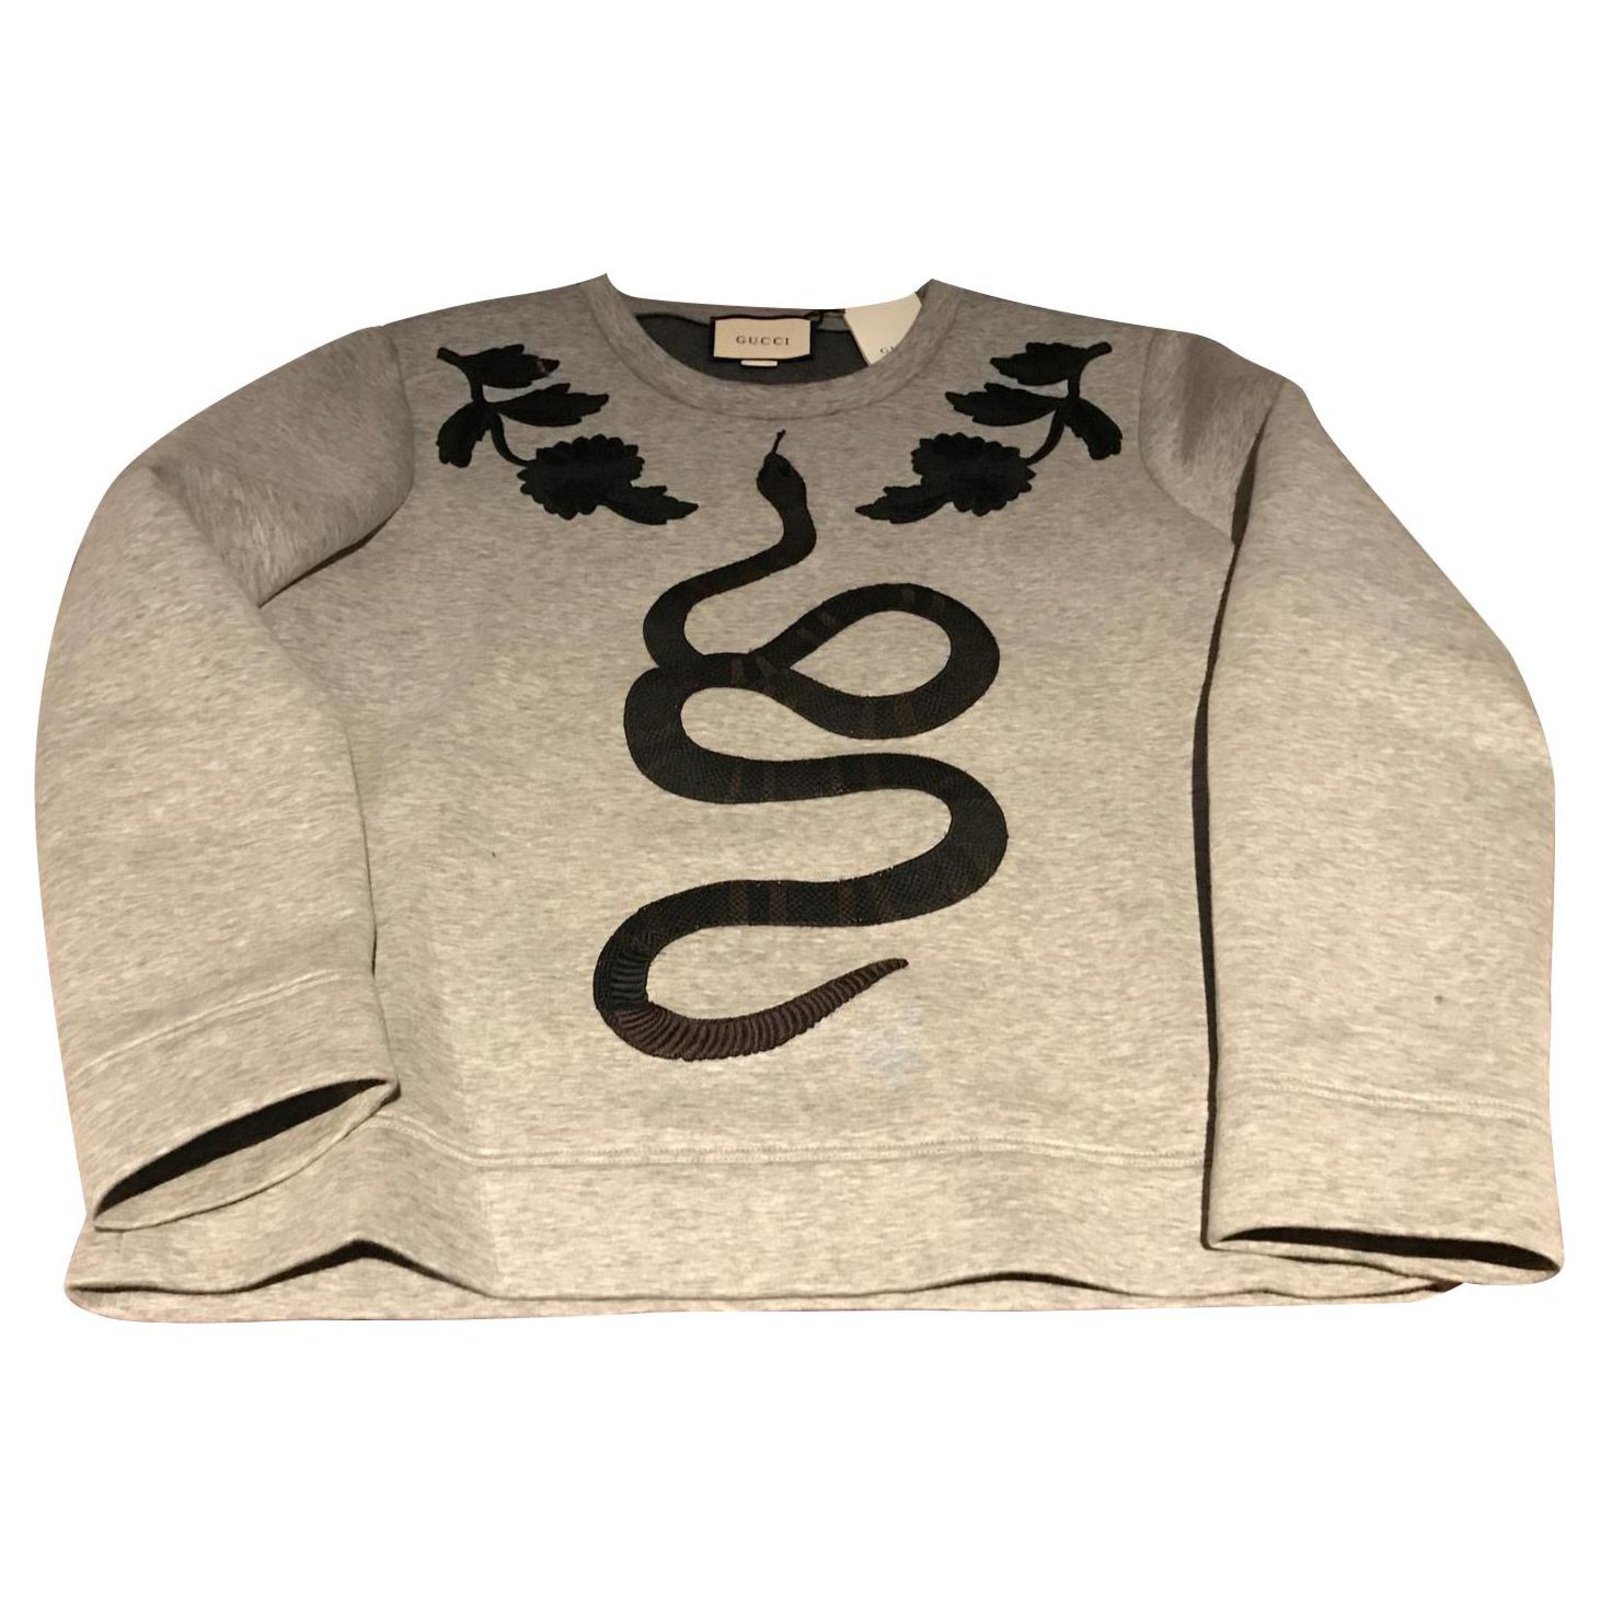 gucci snake sweater